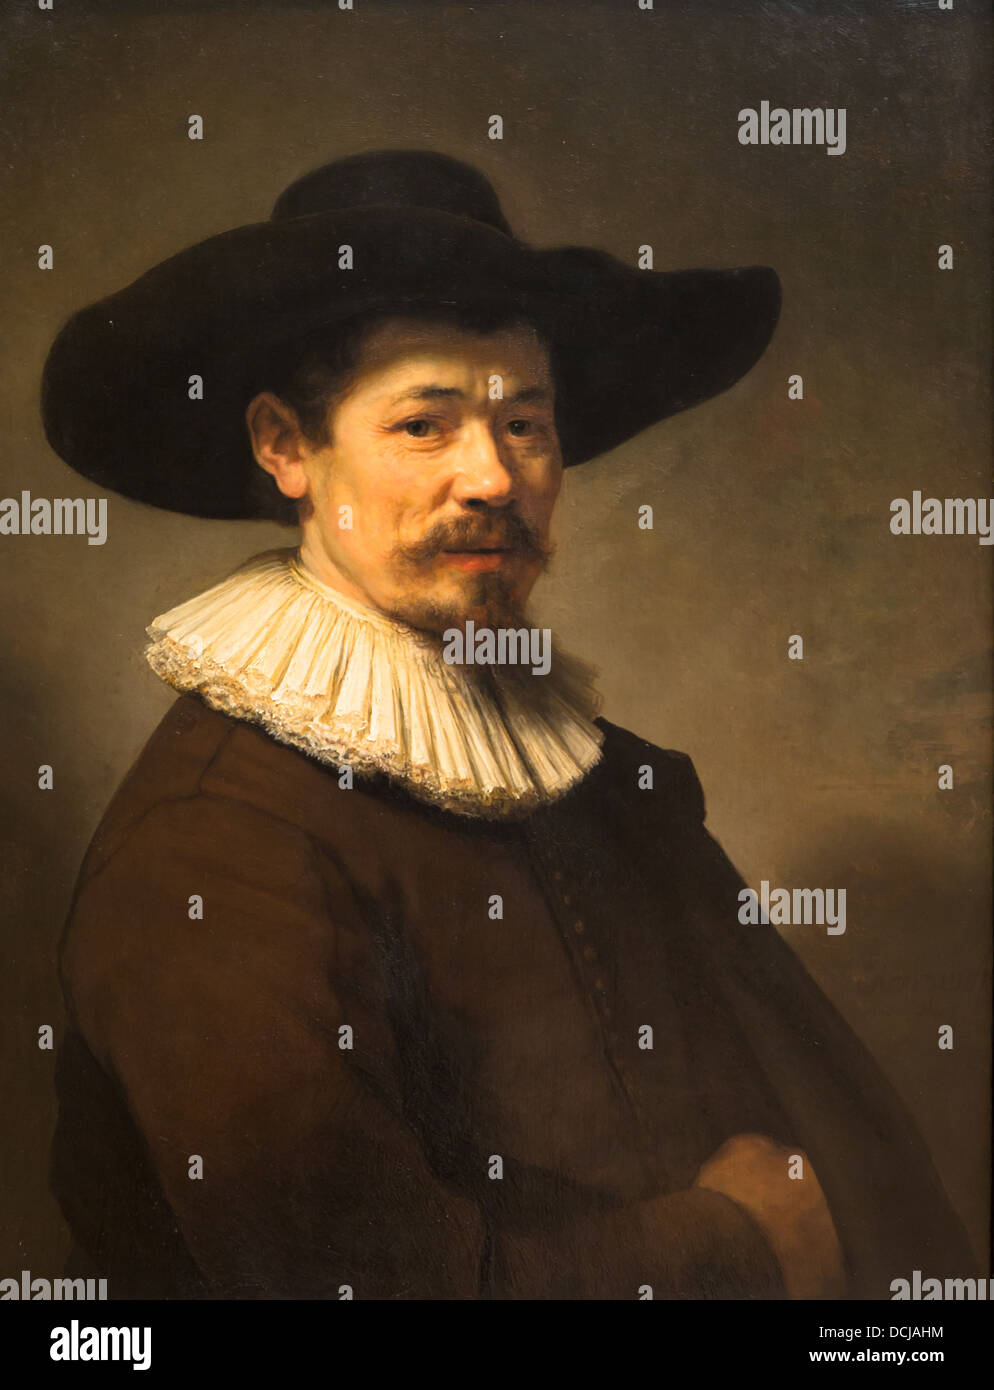 17th century  -  Herman Doomer - Rembrandt (1640) - Metropolitan Museum of Art - New York Oil on canvas Stock Photo